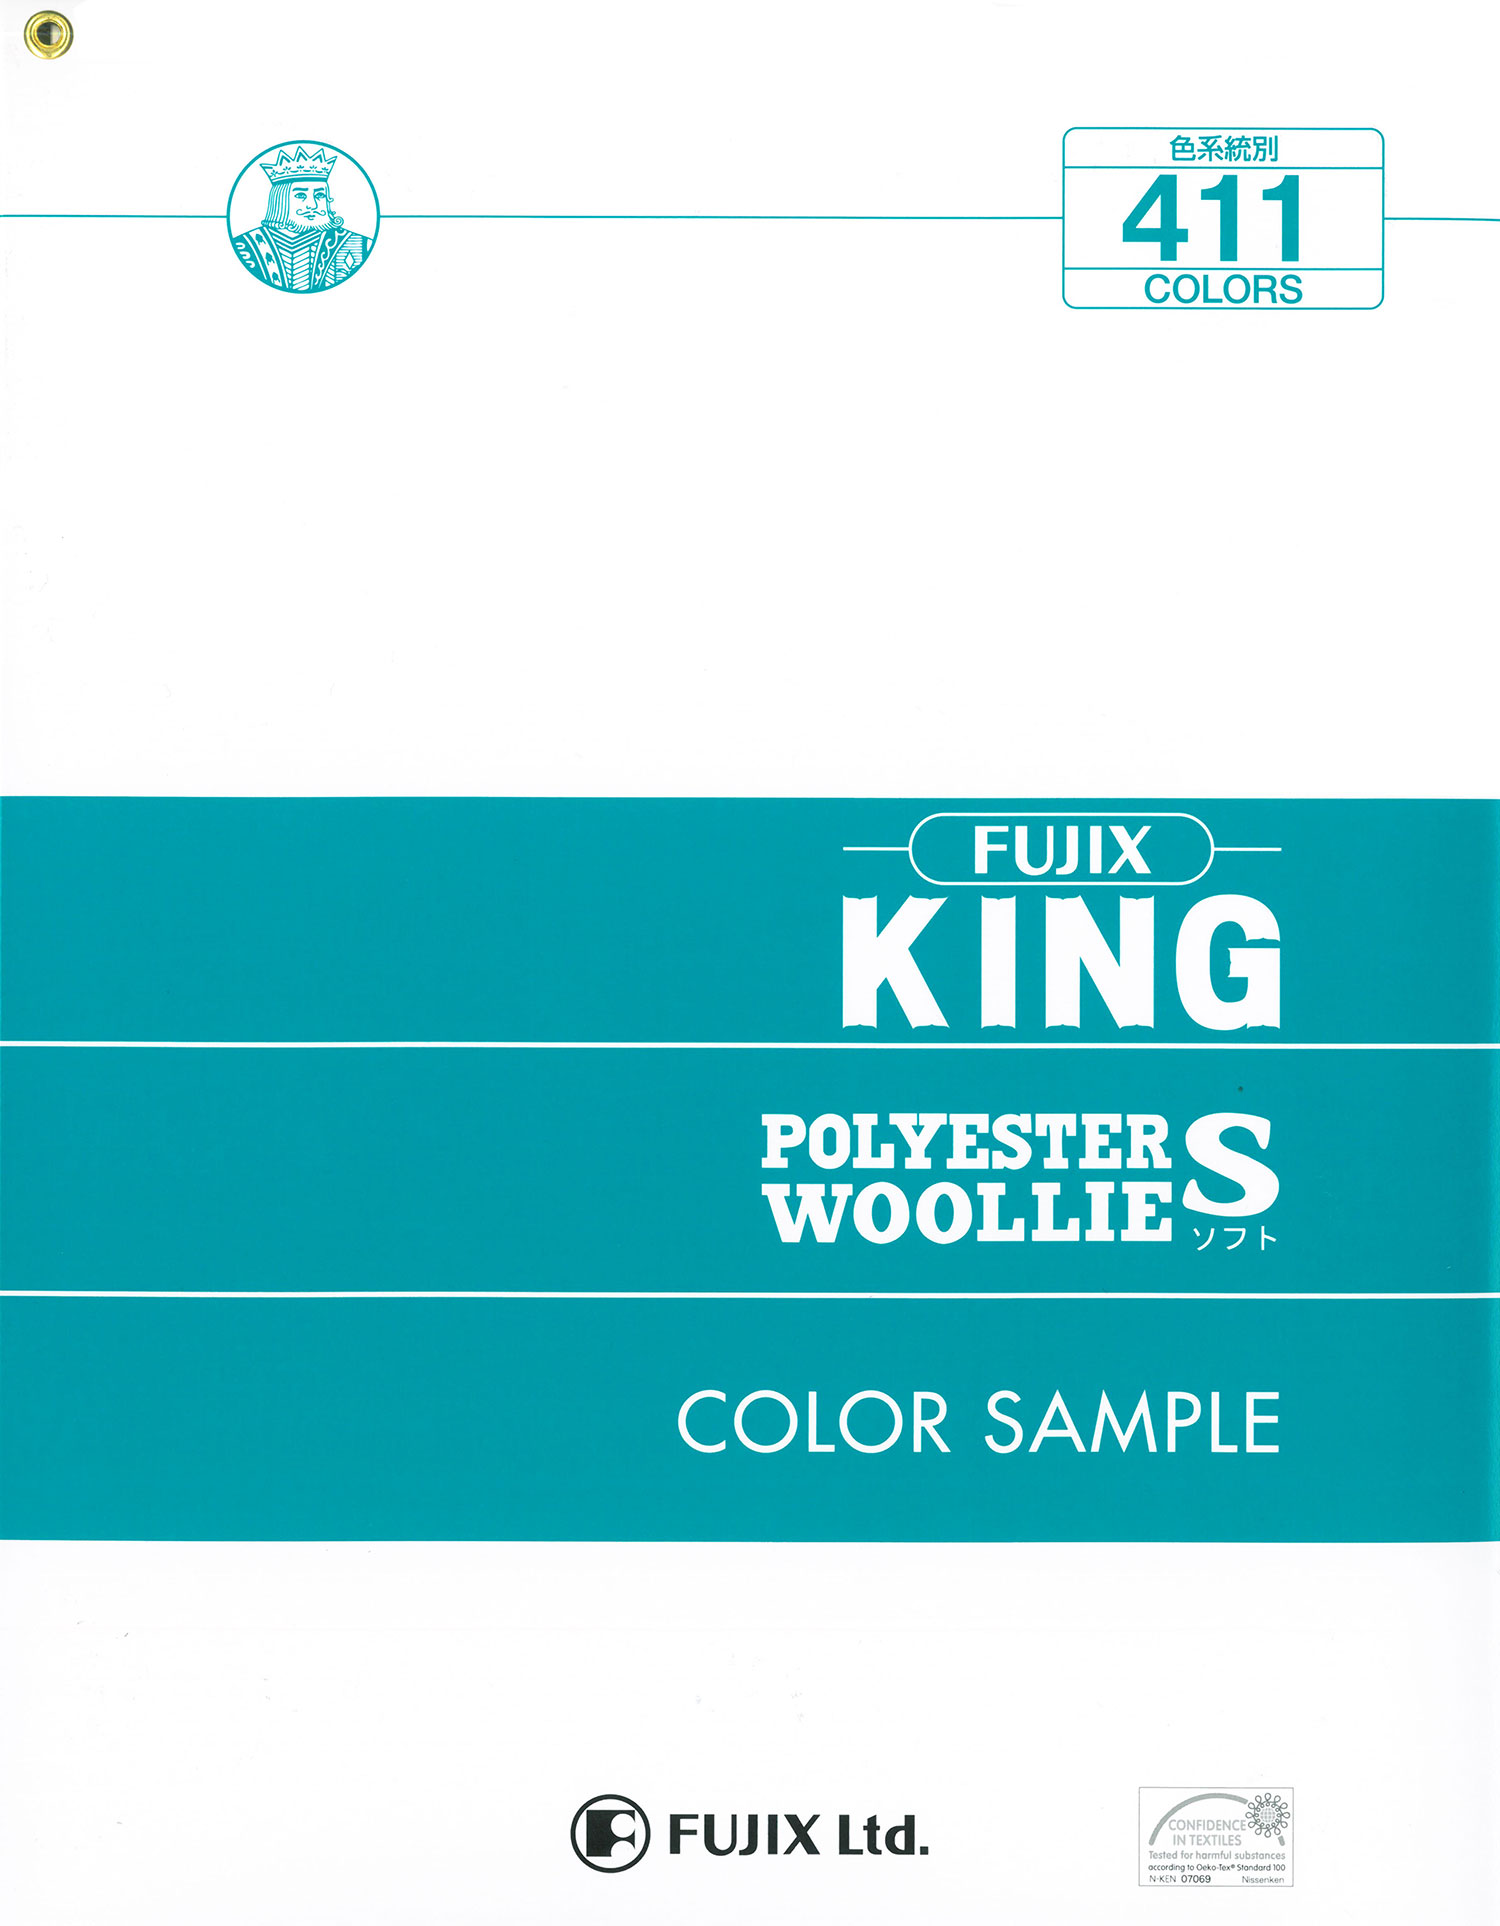 FUJIX-SAMPLE-8 KING POLYESTER WOOLIE S[Sample Card] FUJIX